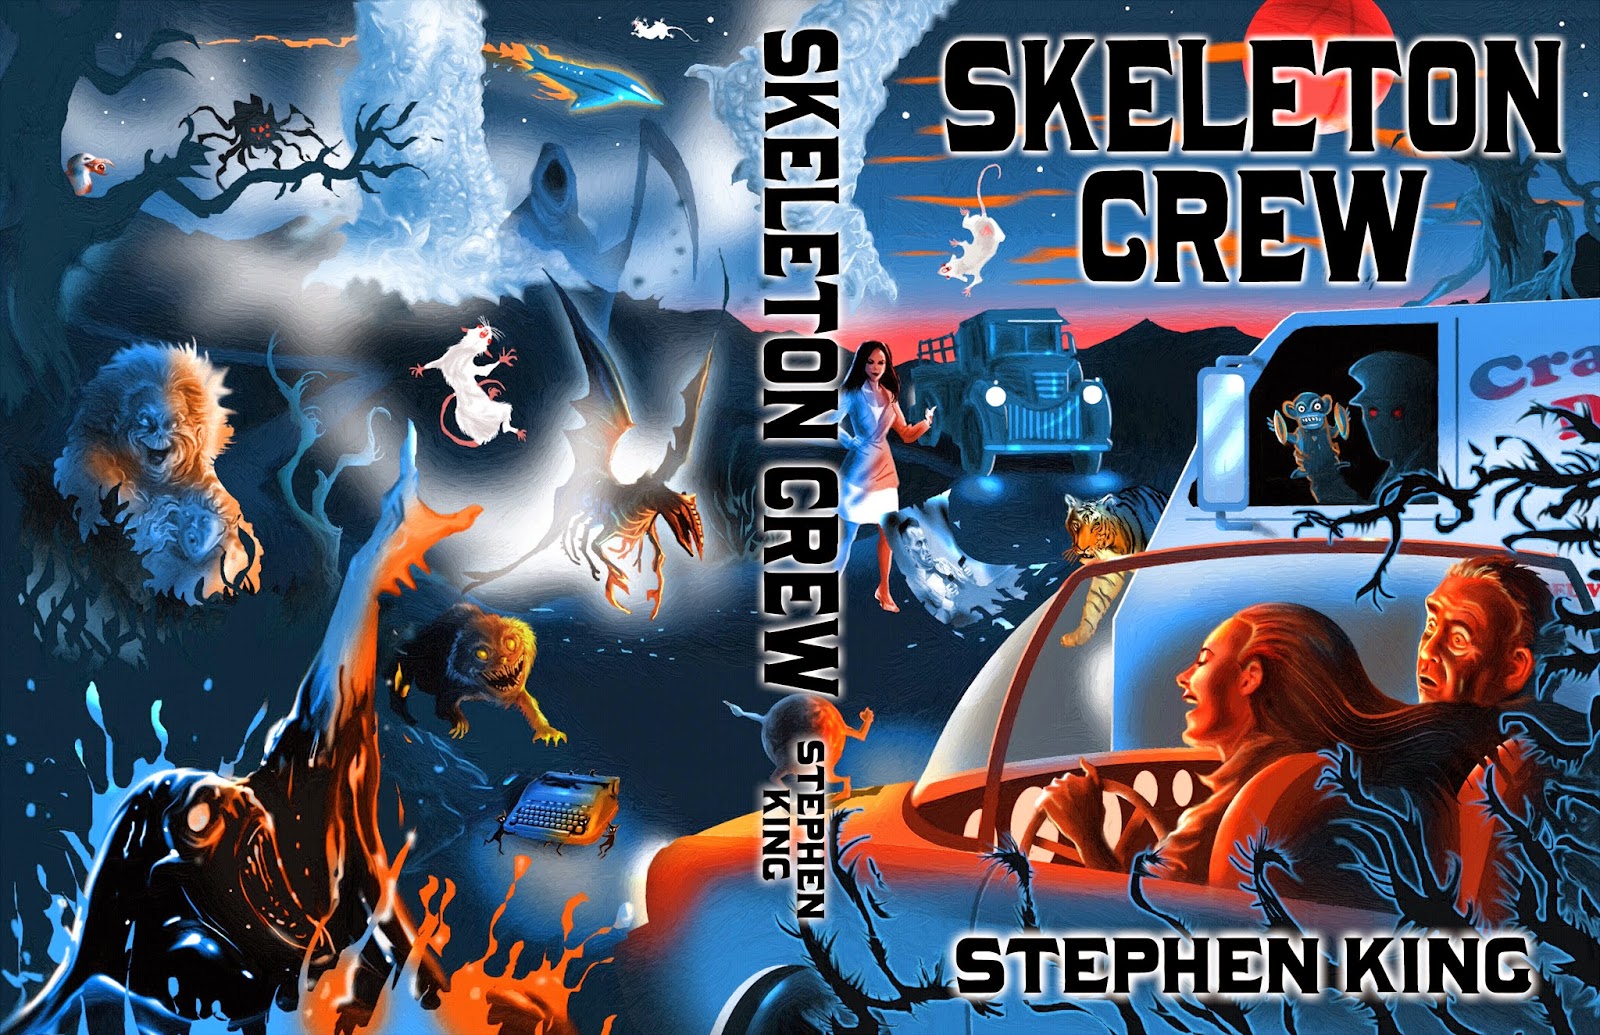 Skeleton Crew Book Cover